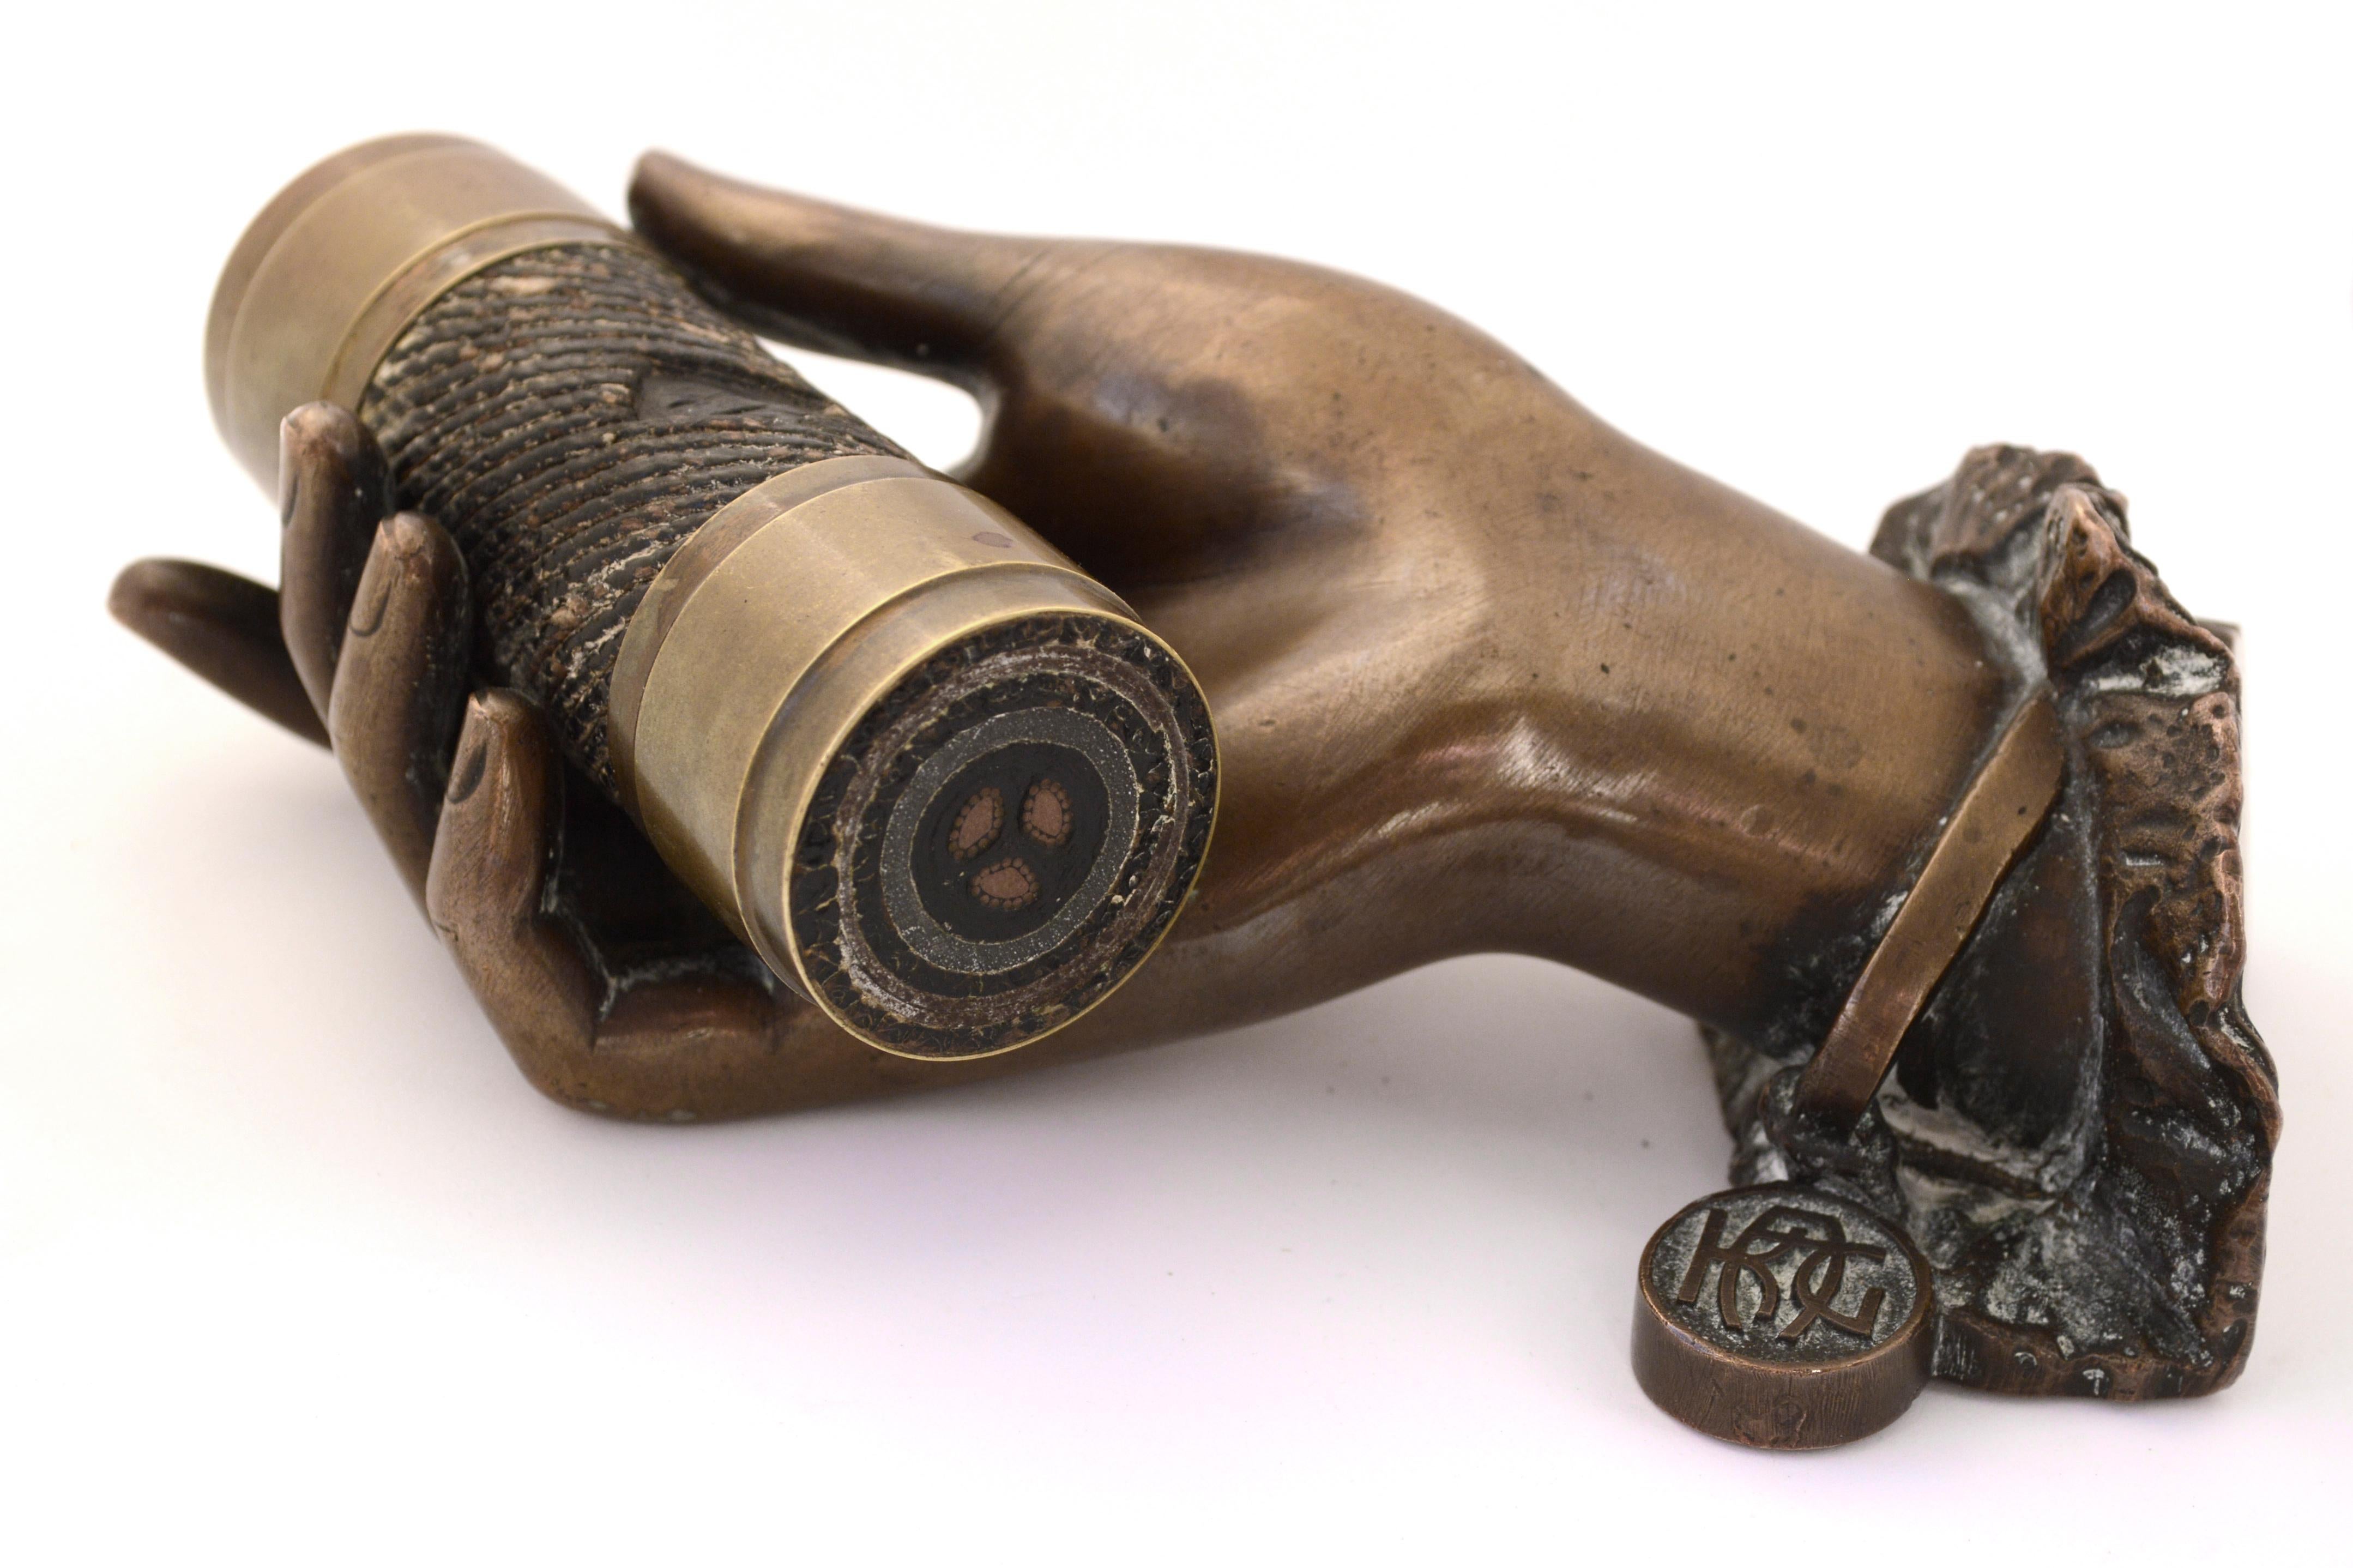 Unknown Figurative Sculpture - Bronze Hand Holding Transatlantic Telegraph Underground Power Cable